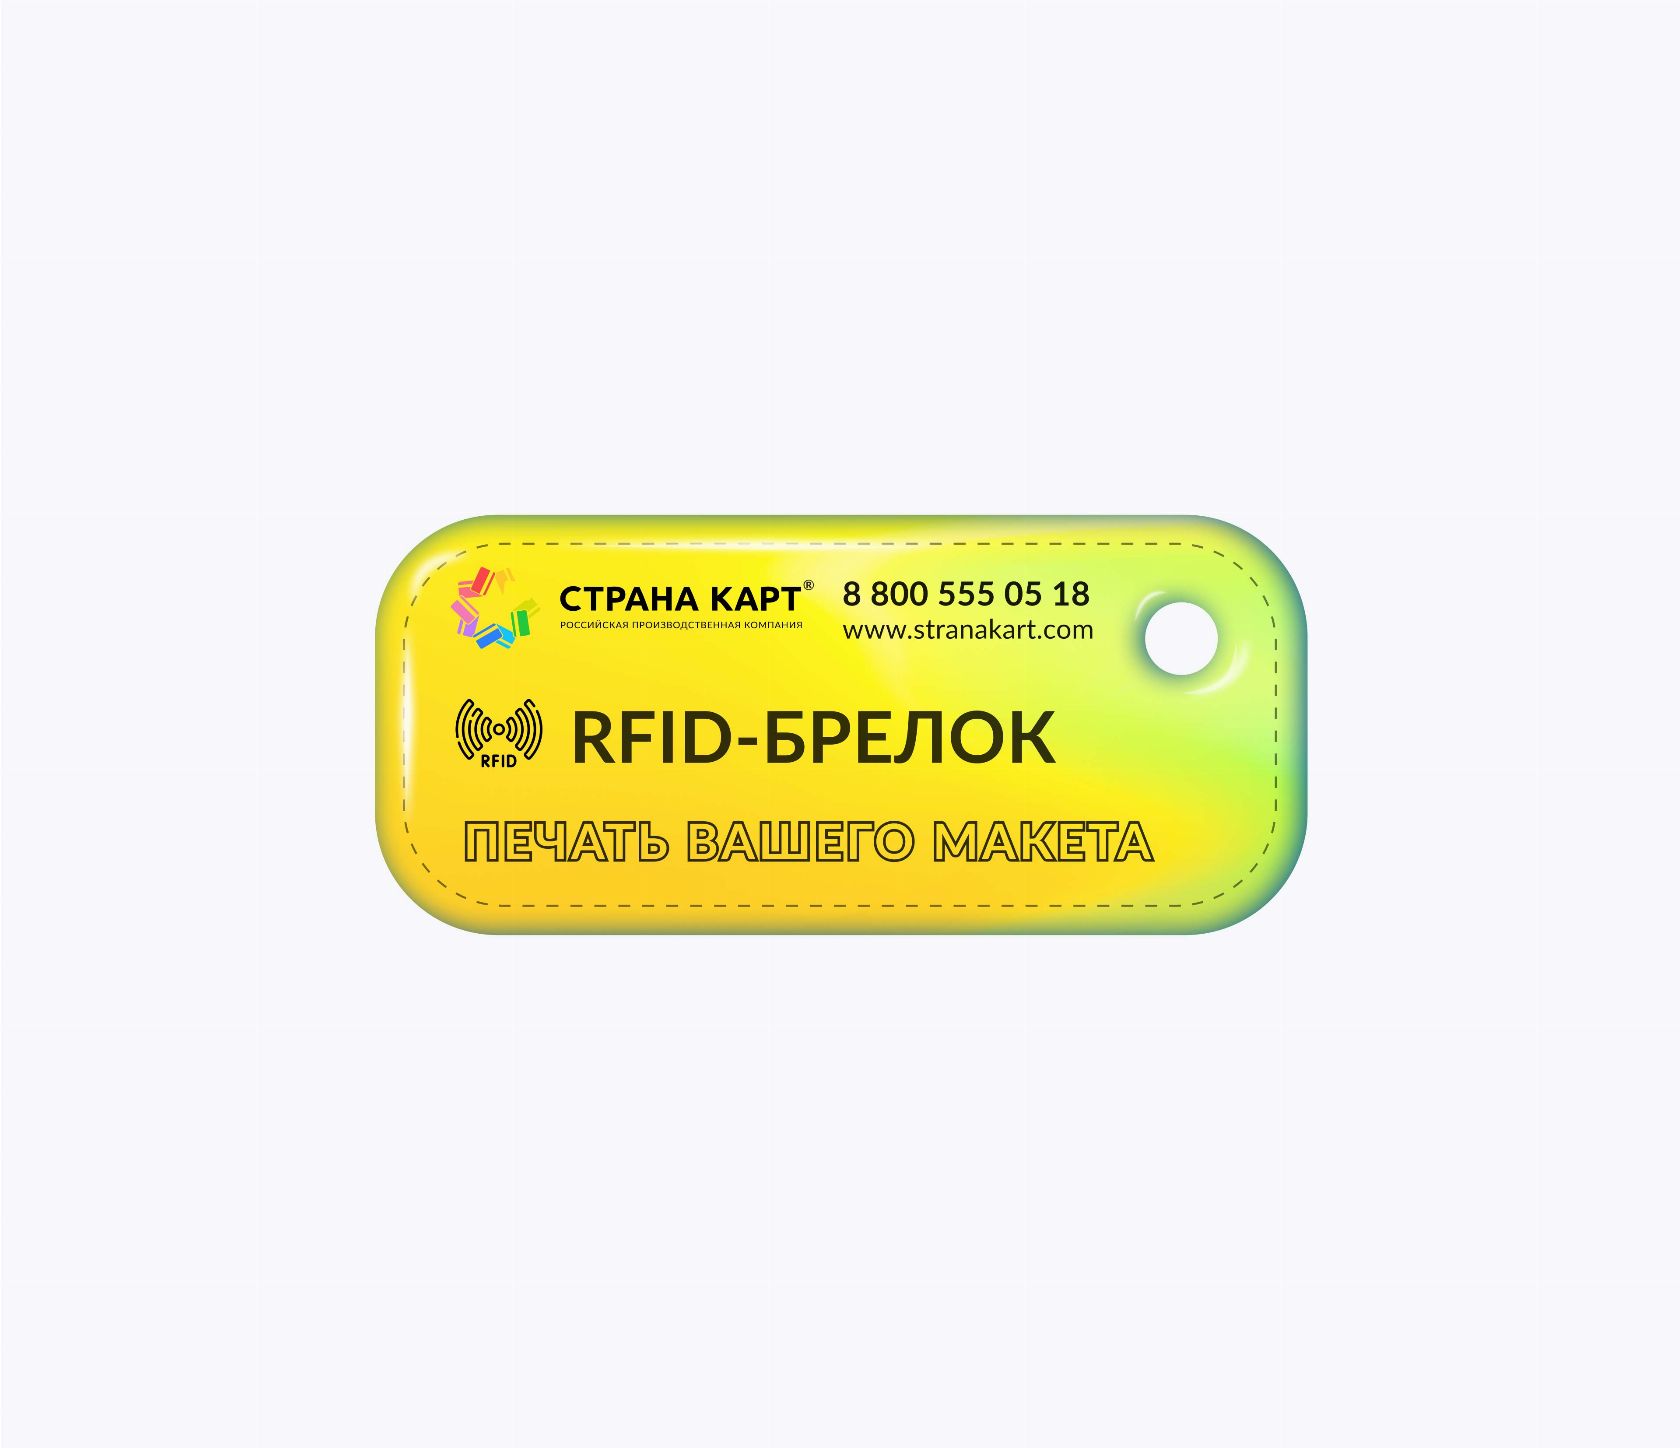 Прямоугольные мини RFID-брелоки NEOKEY® с чипом NXP MIFARE Plus S 4k 7 byte UID RFID-брелоки NEOKEY® с чипом NXP MIFARE Plus S 4k 7 byte UID и вашим логотипом